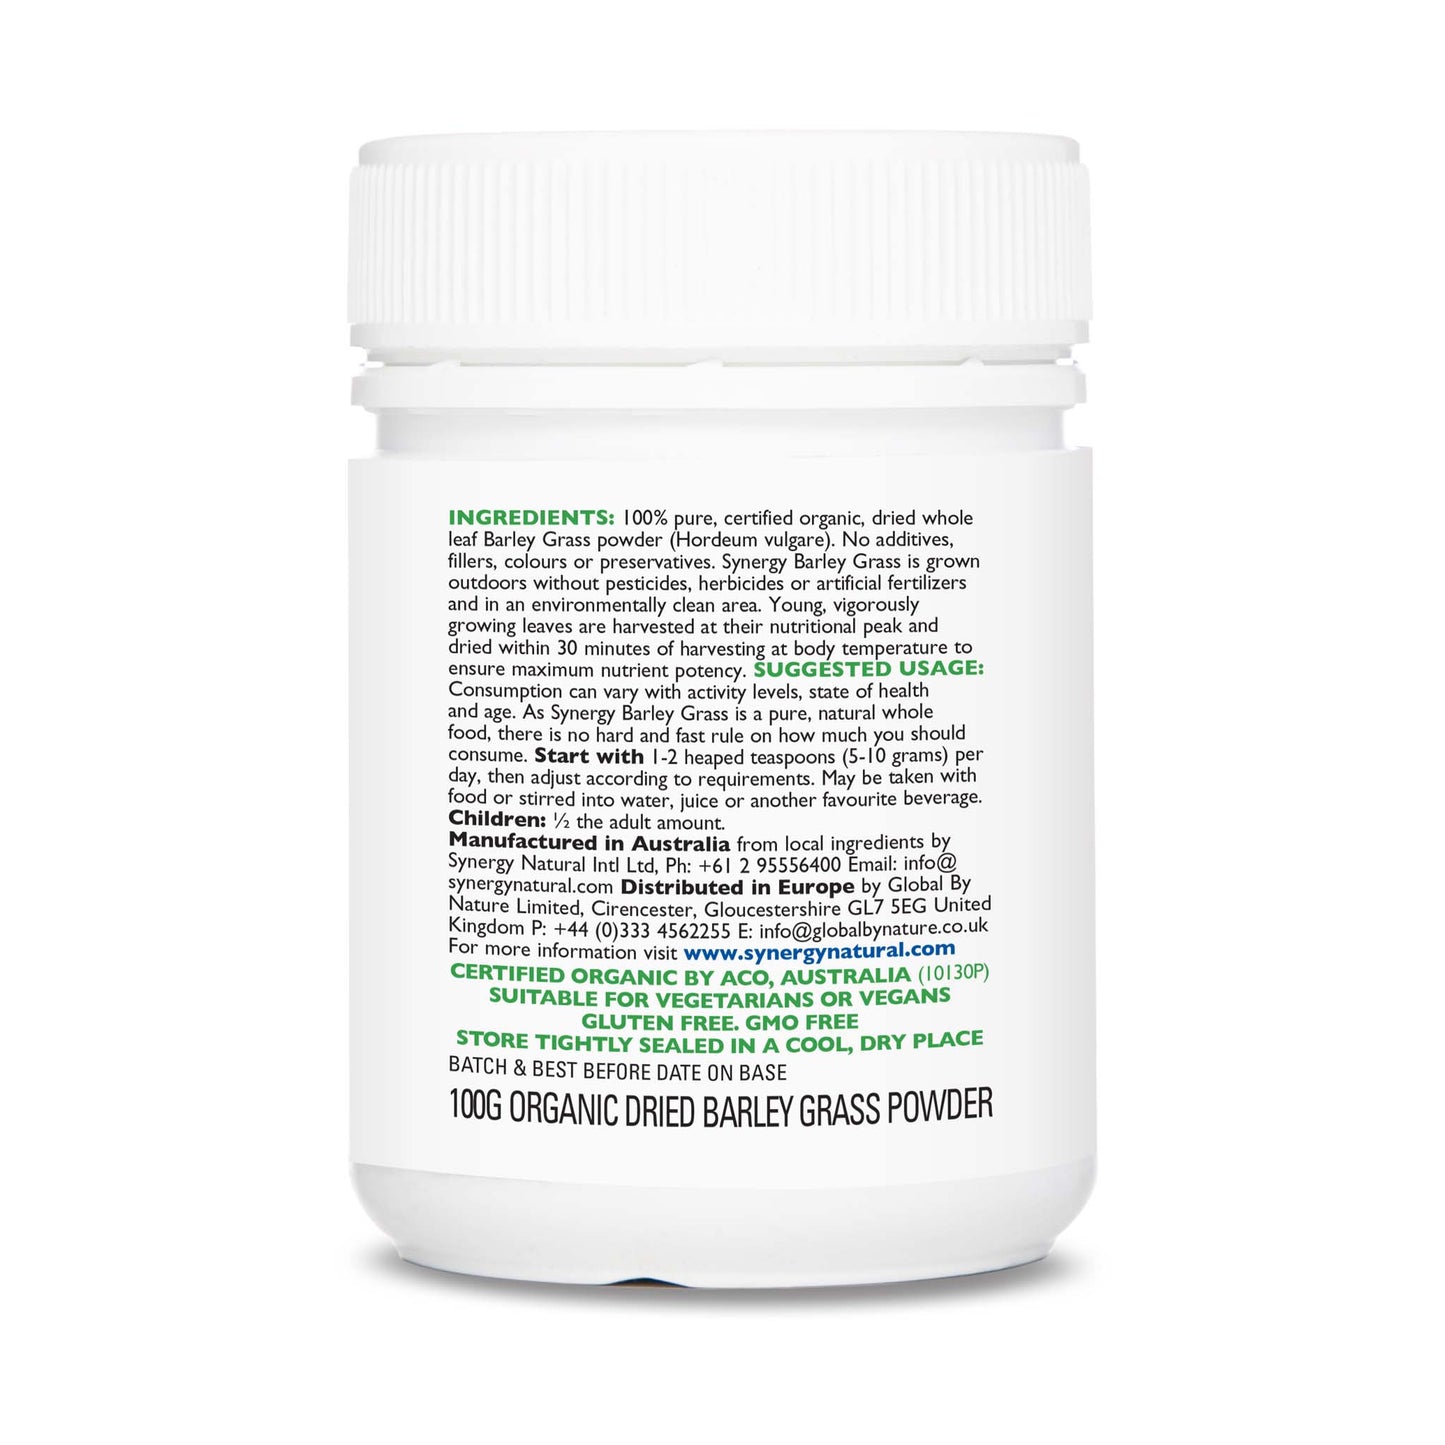 Synergy Natural Organic Barley Grass 100g Powder